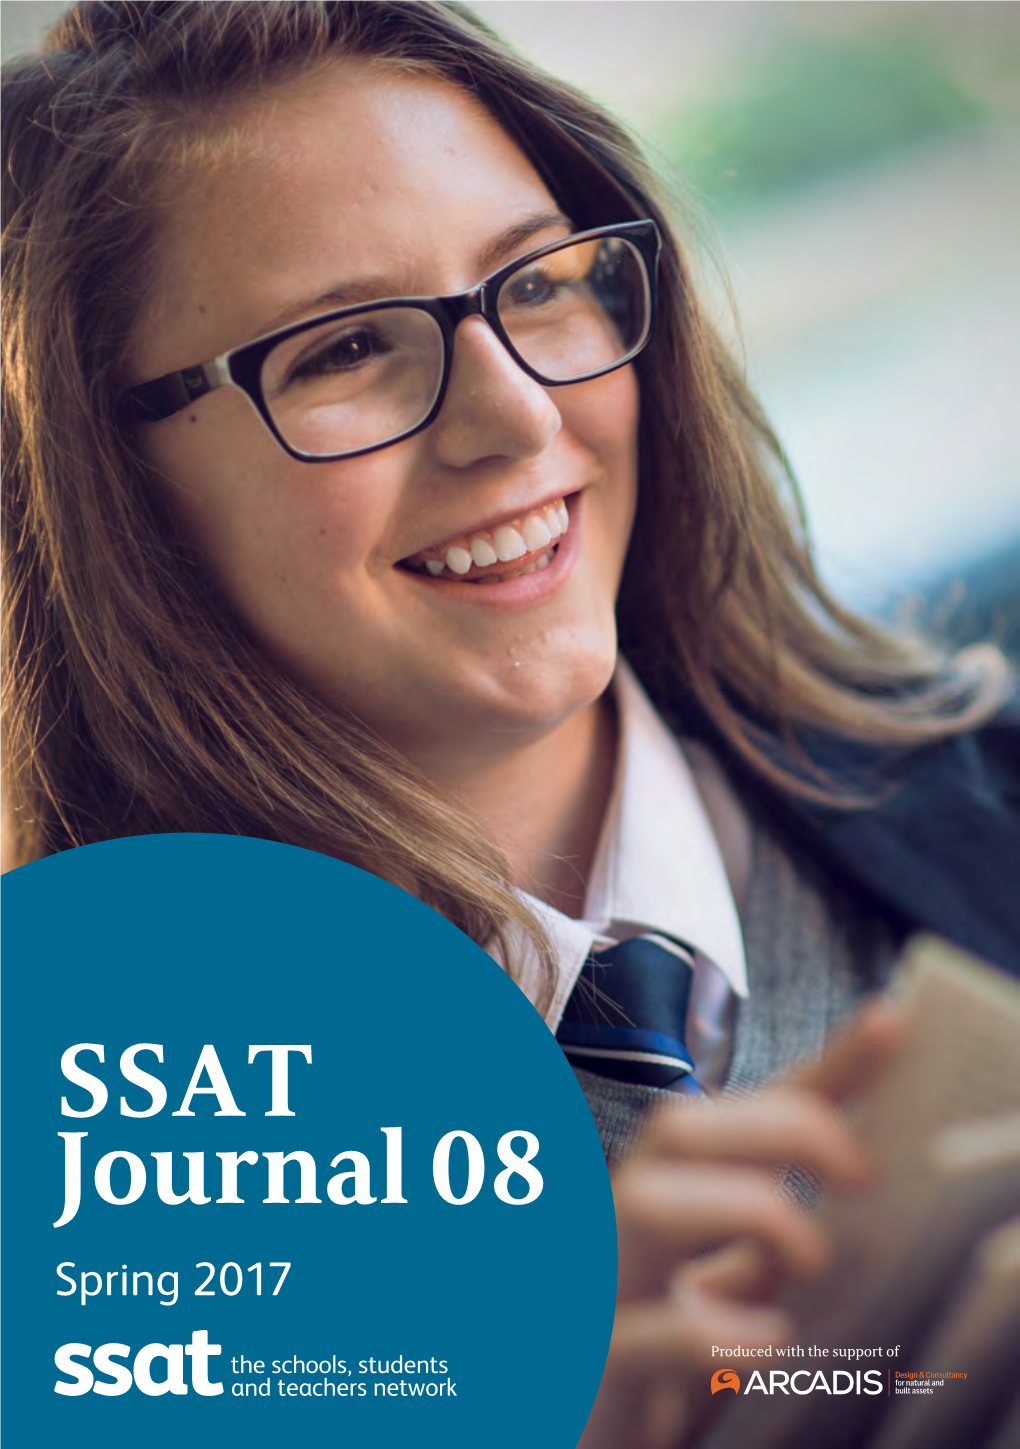 SSAT Journal 08 Spring 2017